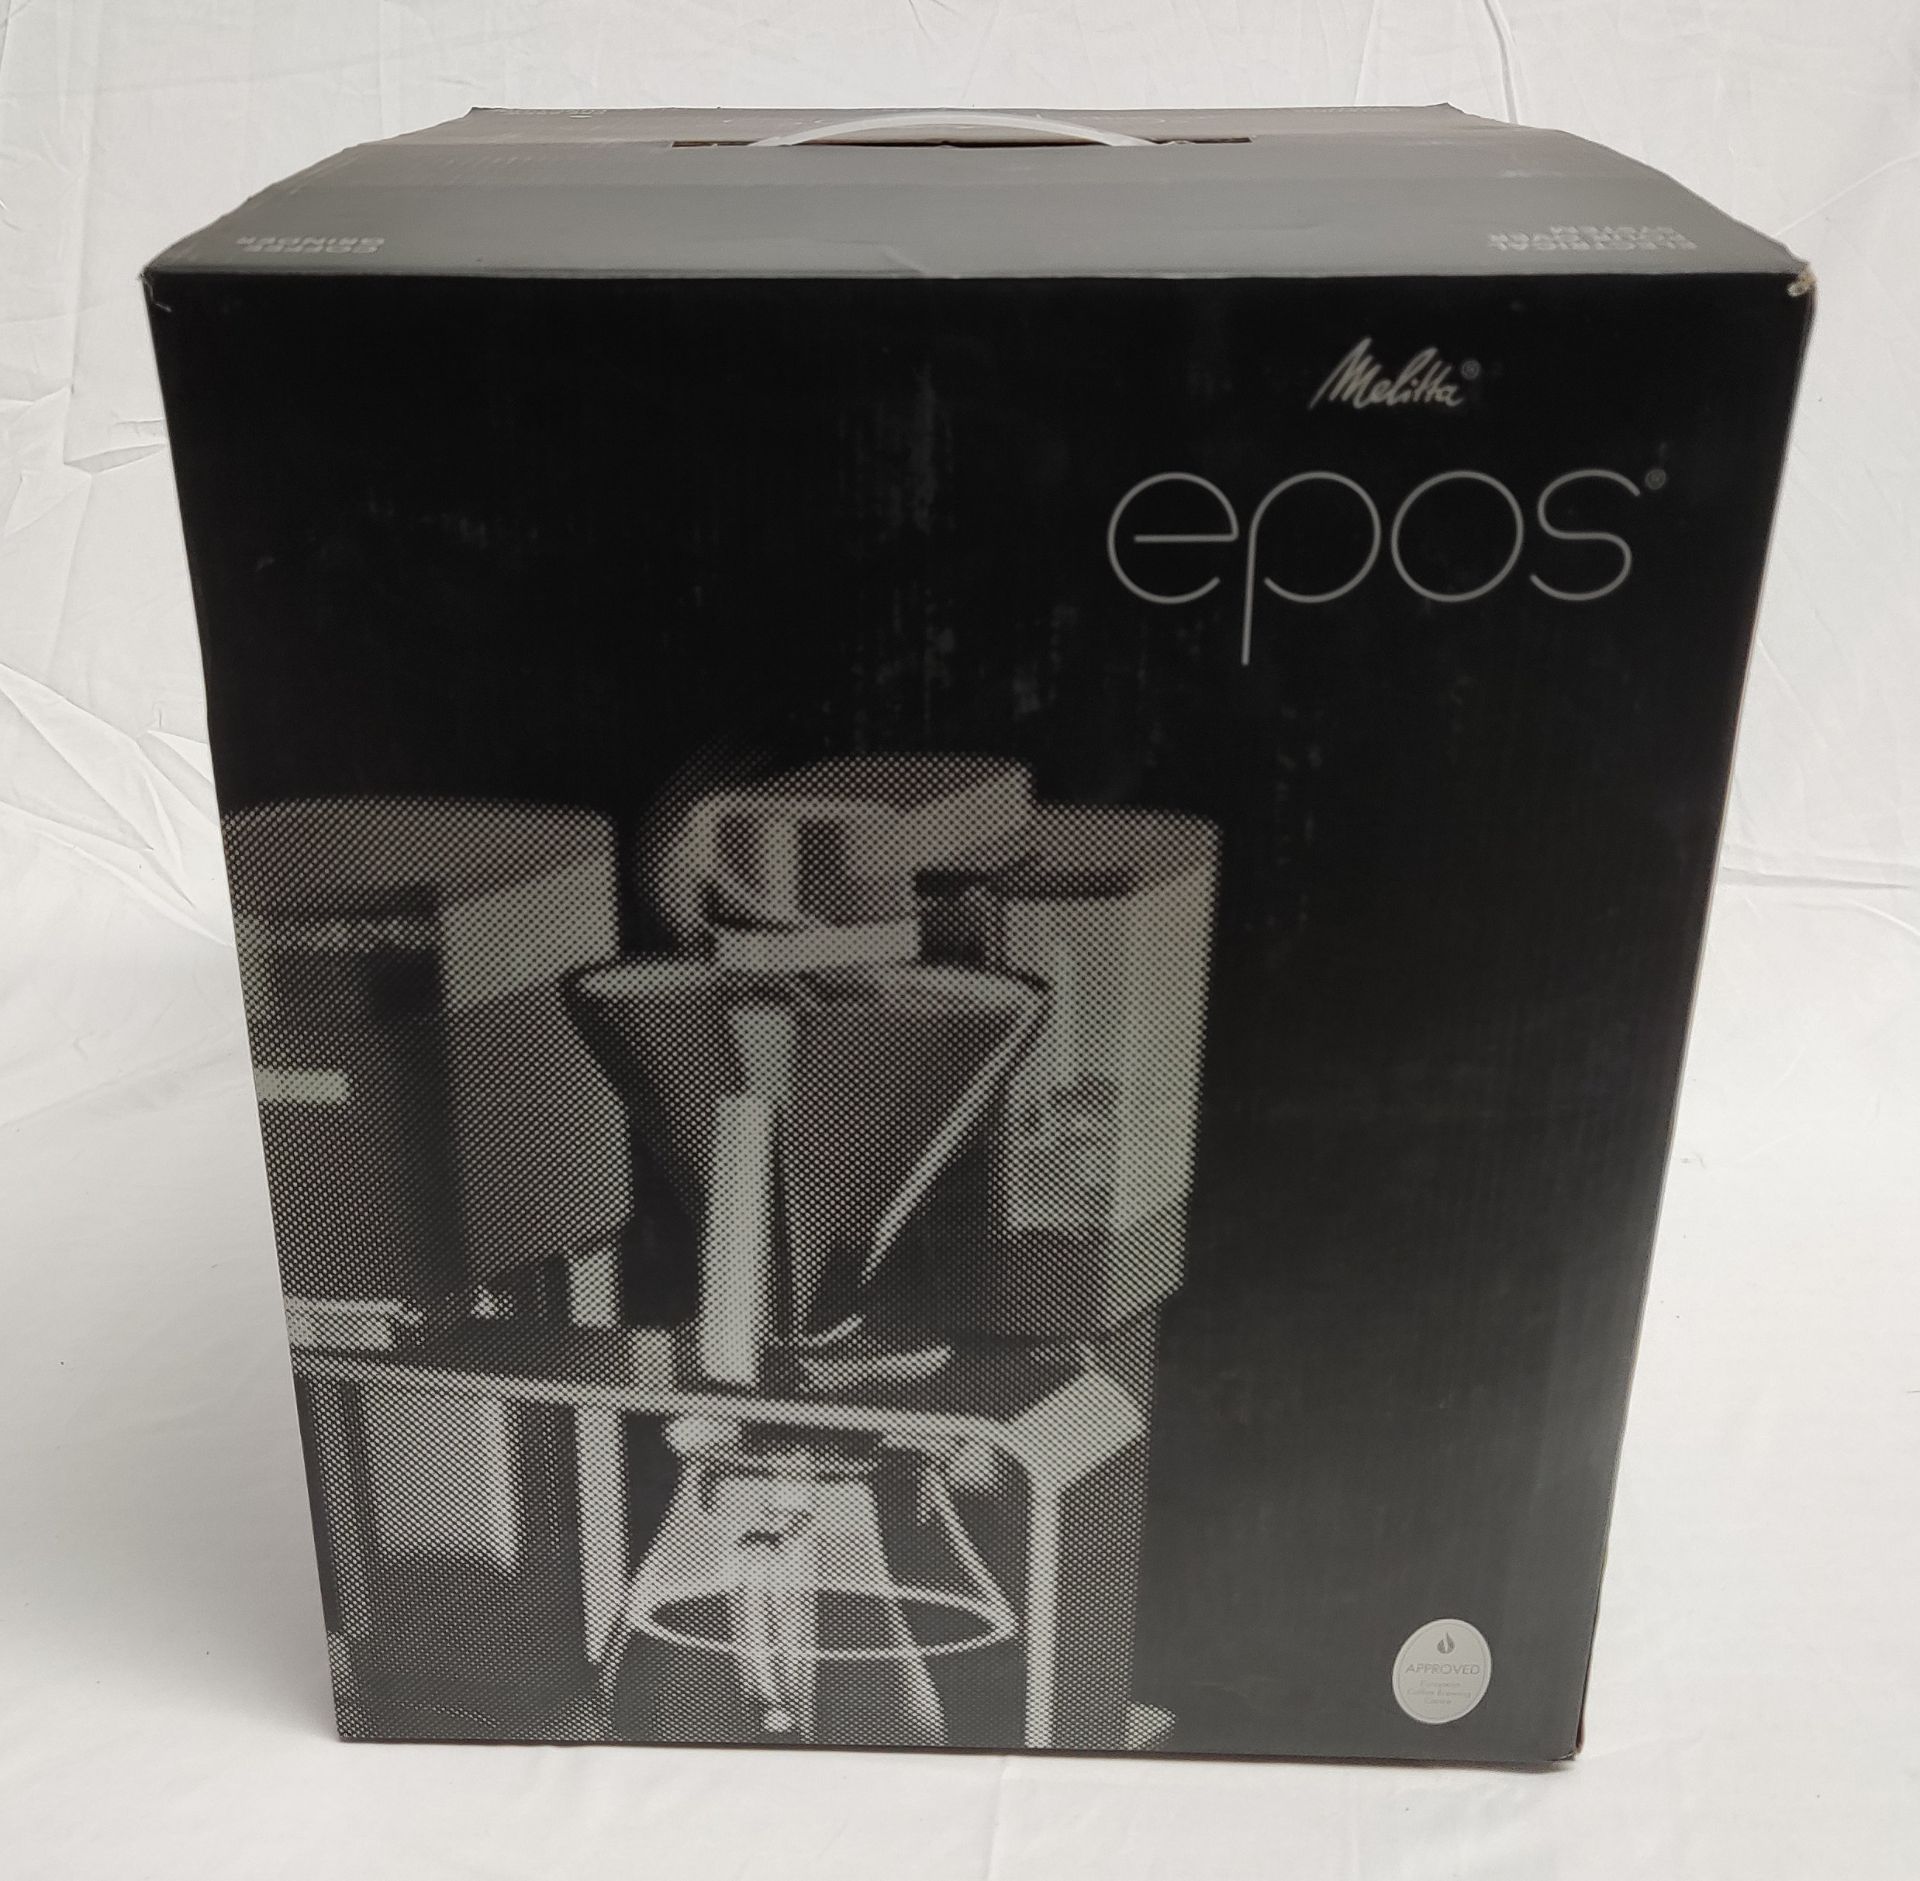 1 x MELITTA Epos Coffee Machine With Grinder - Boxed - Original RRP £399 - Ref: 7129012/HJL350/C19/ - Image 14 of 14